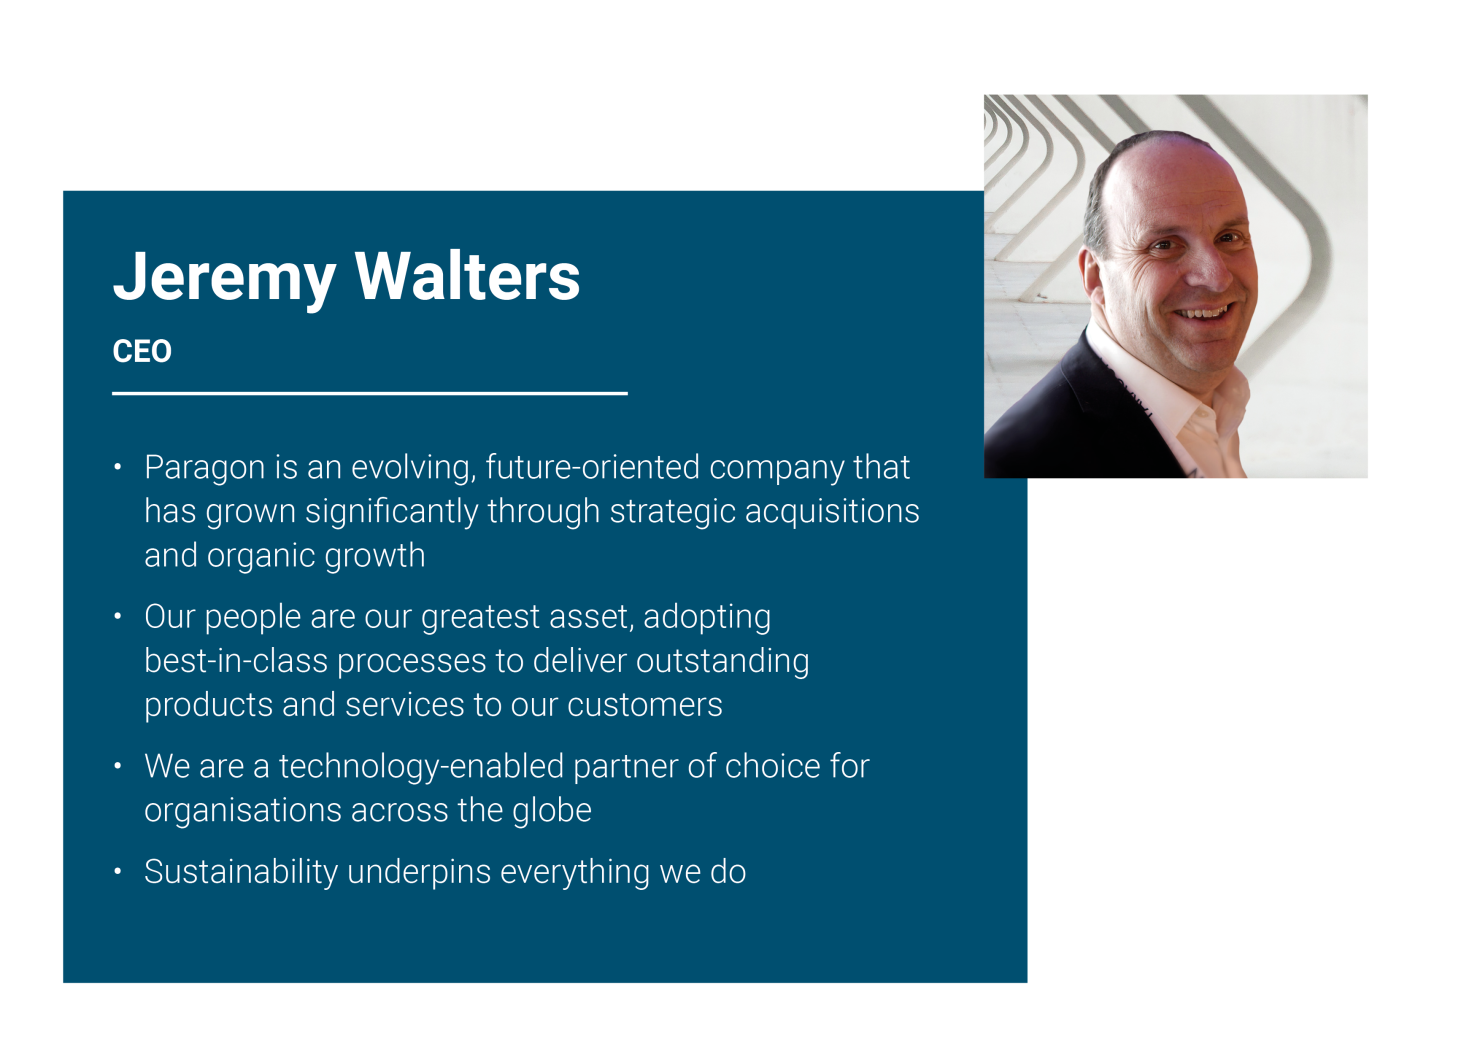 Jeremy Walters - CEO